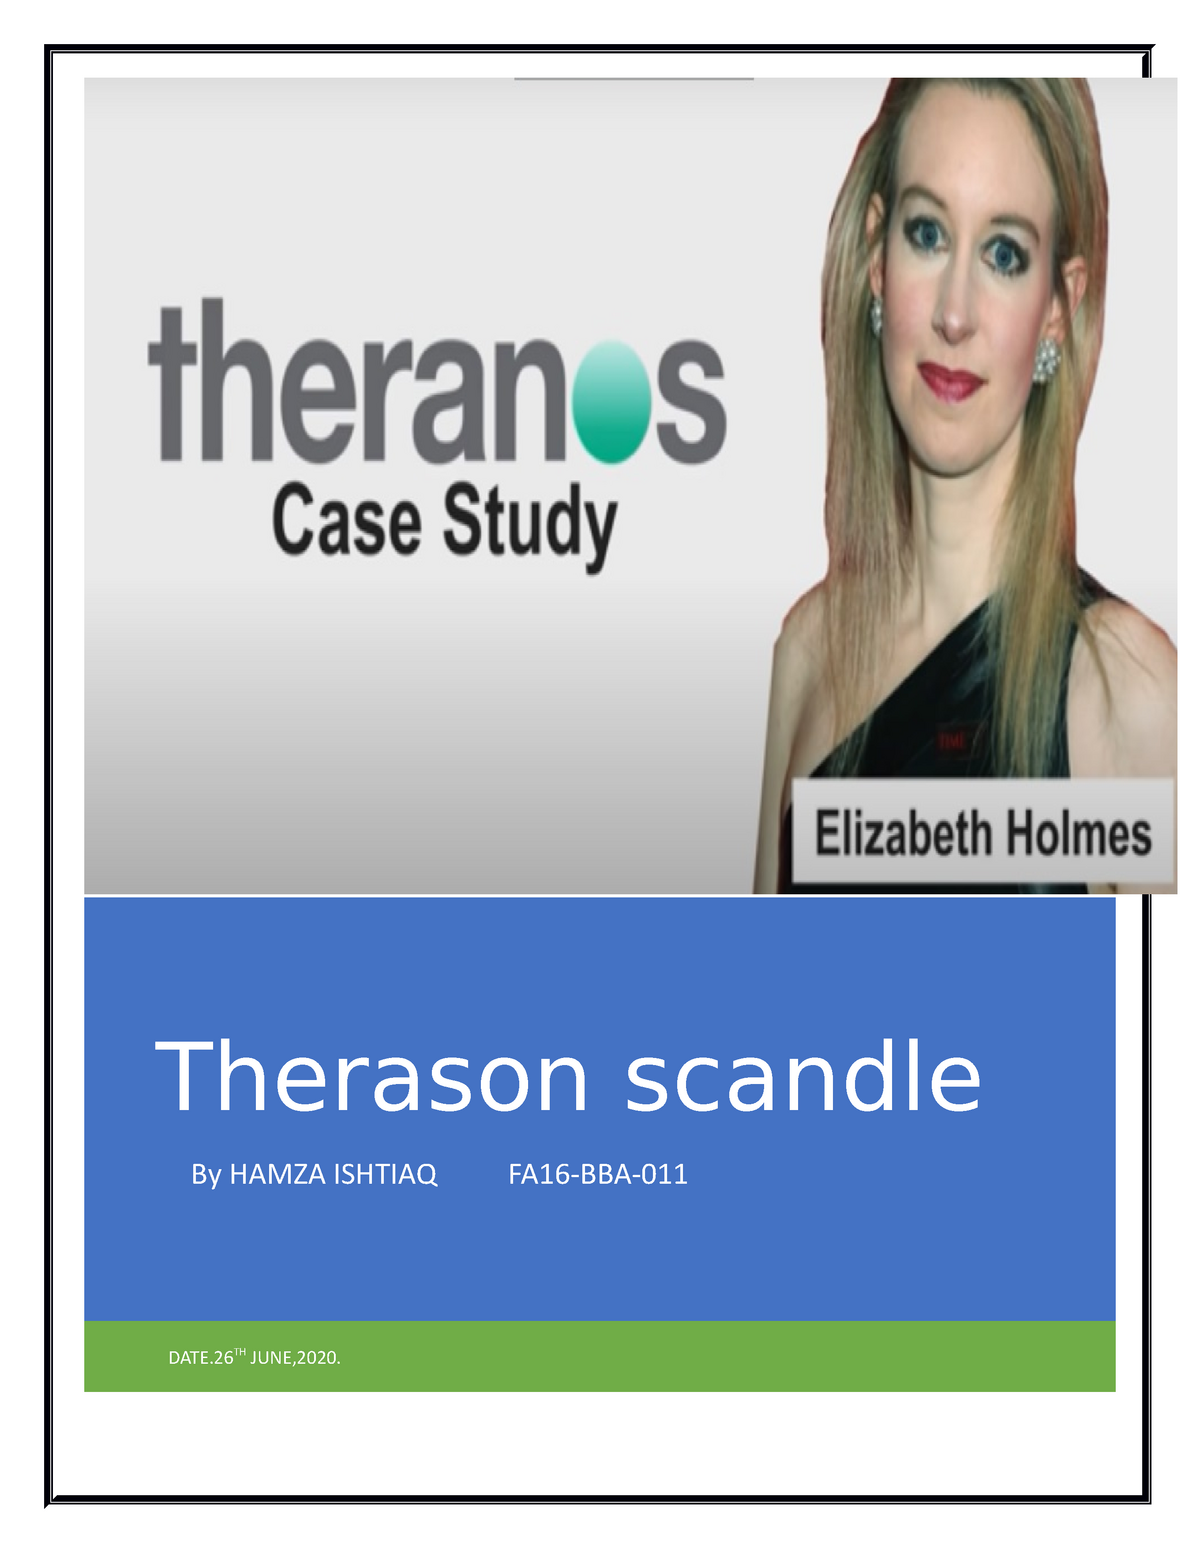 theranos case study pdf